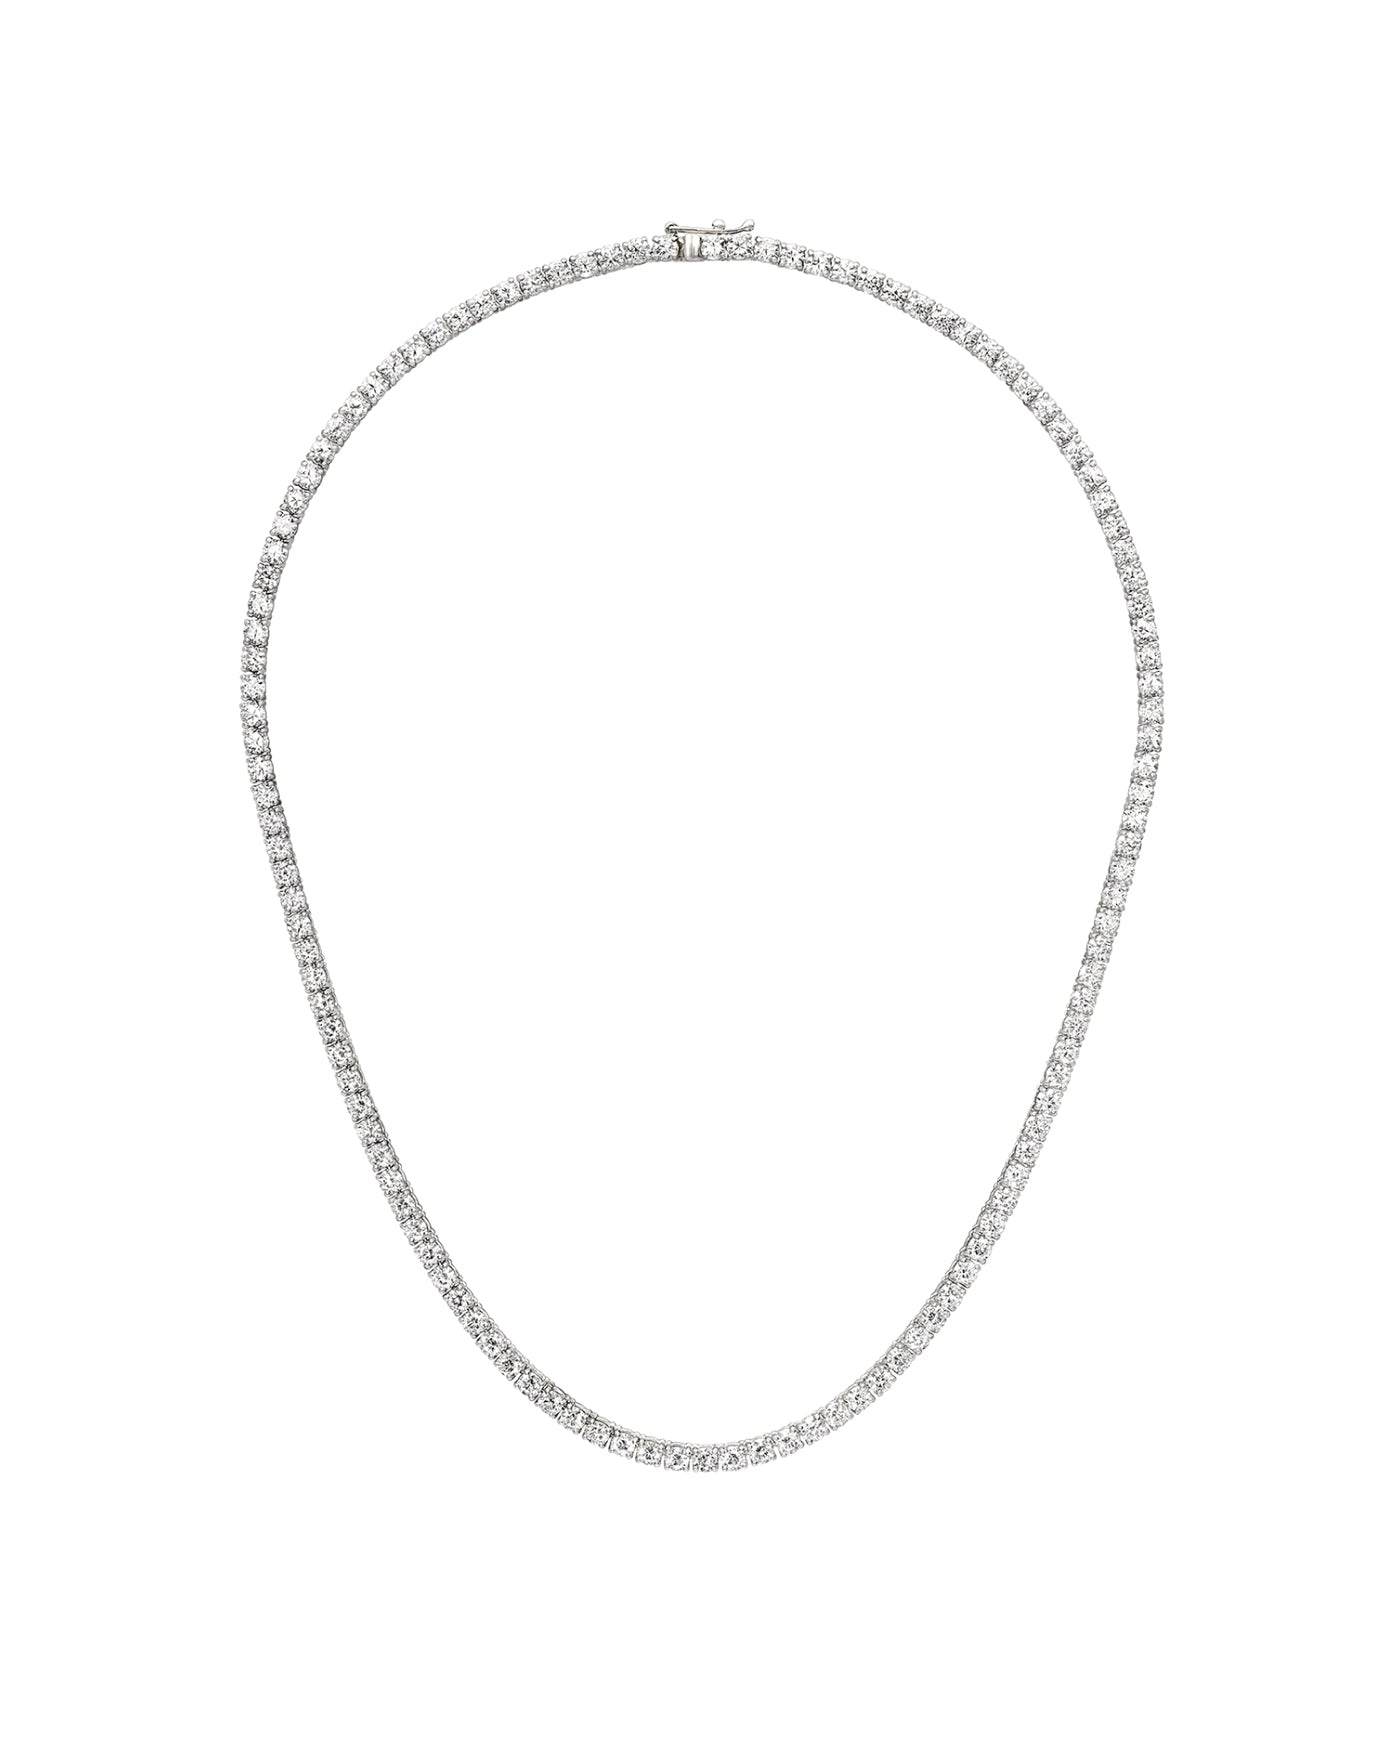 5 carat Tennis Necklace | Round Cut